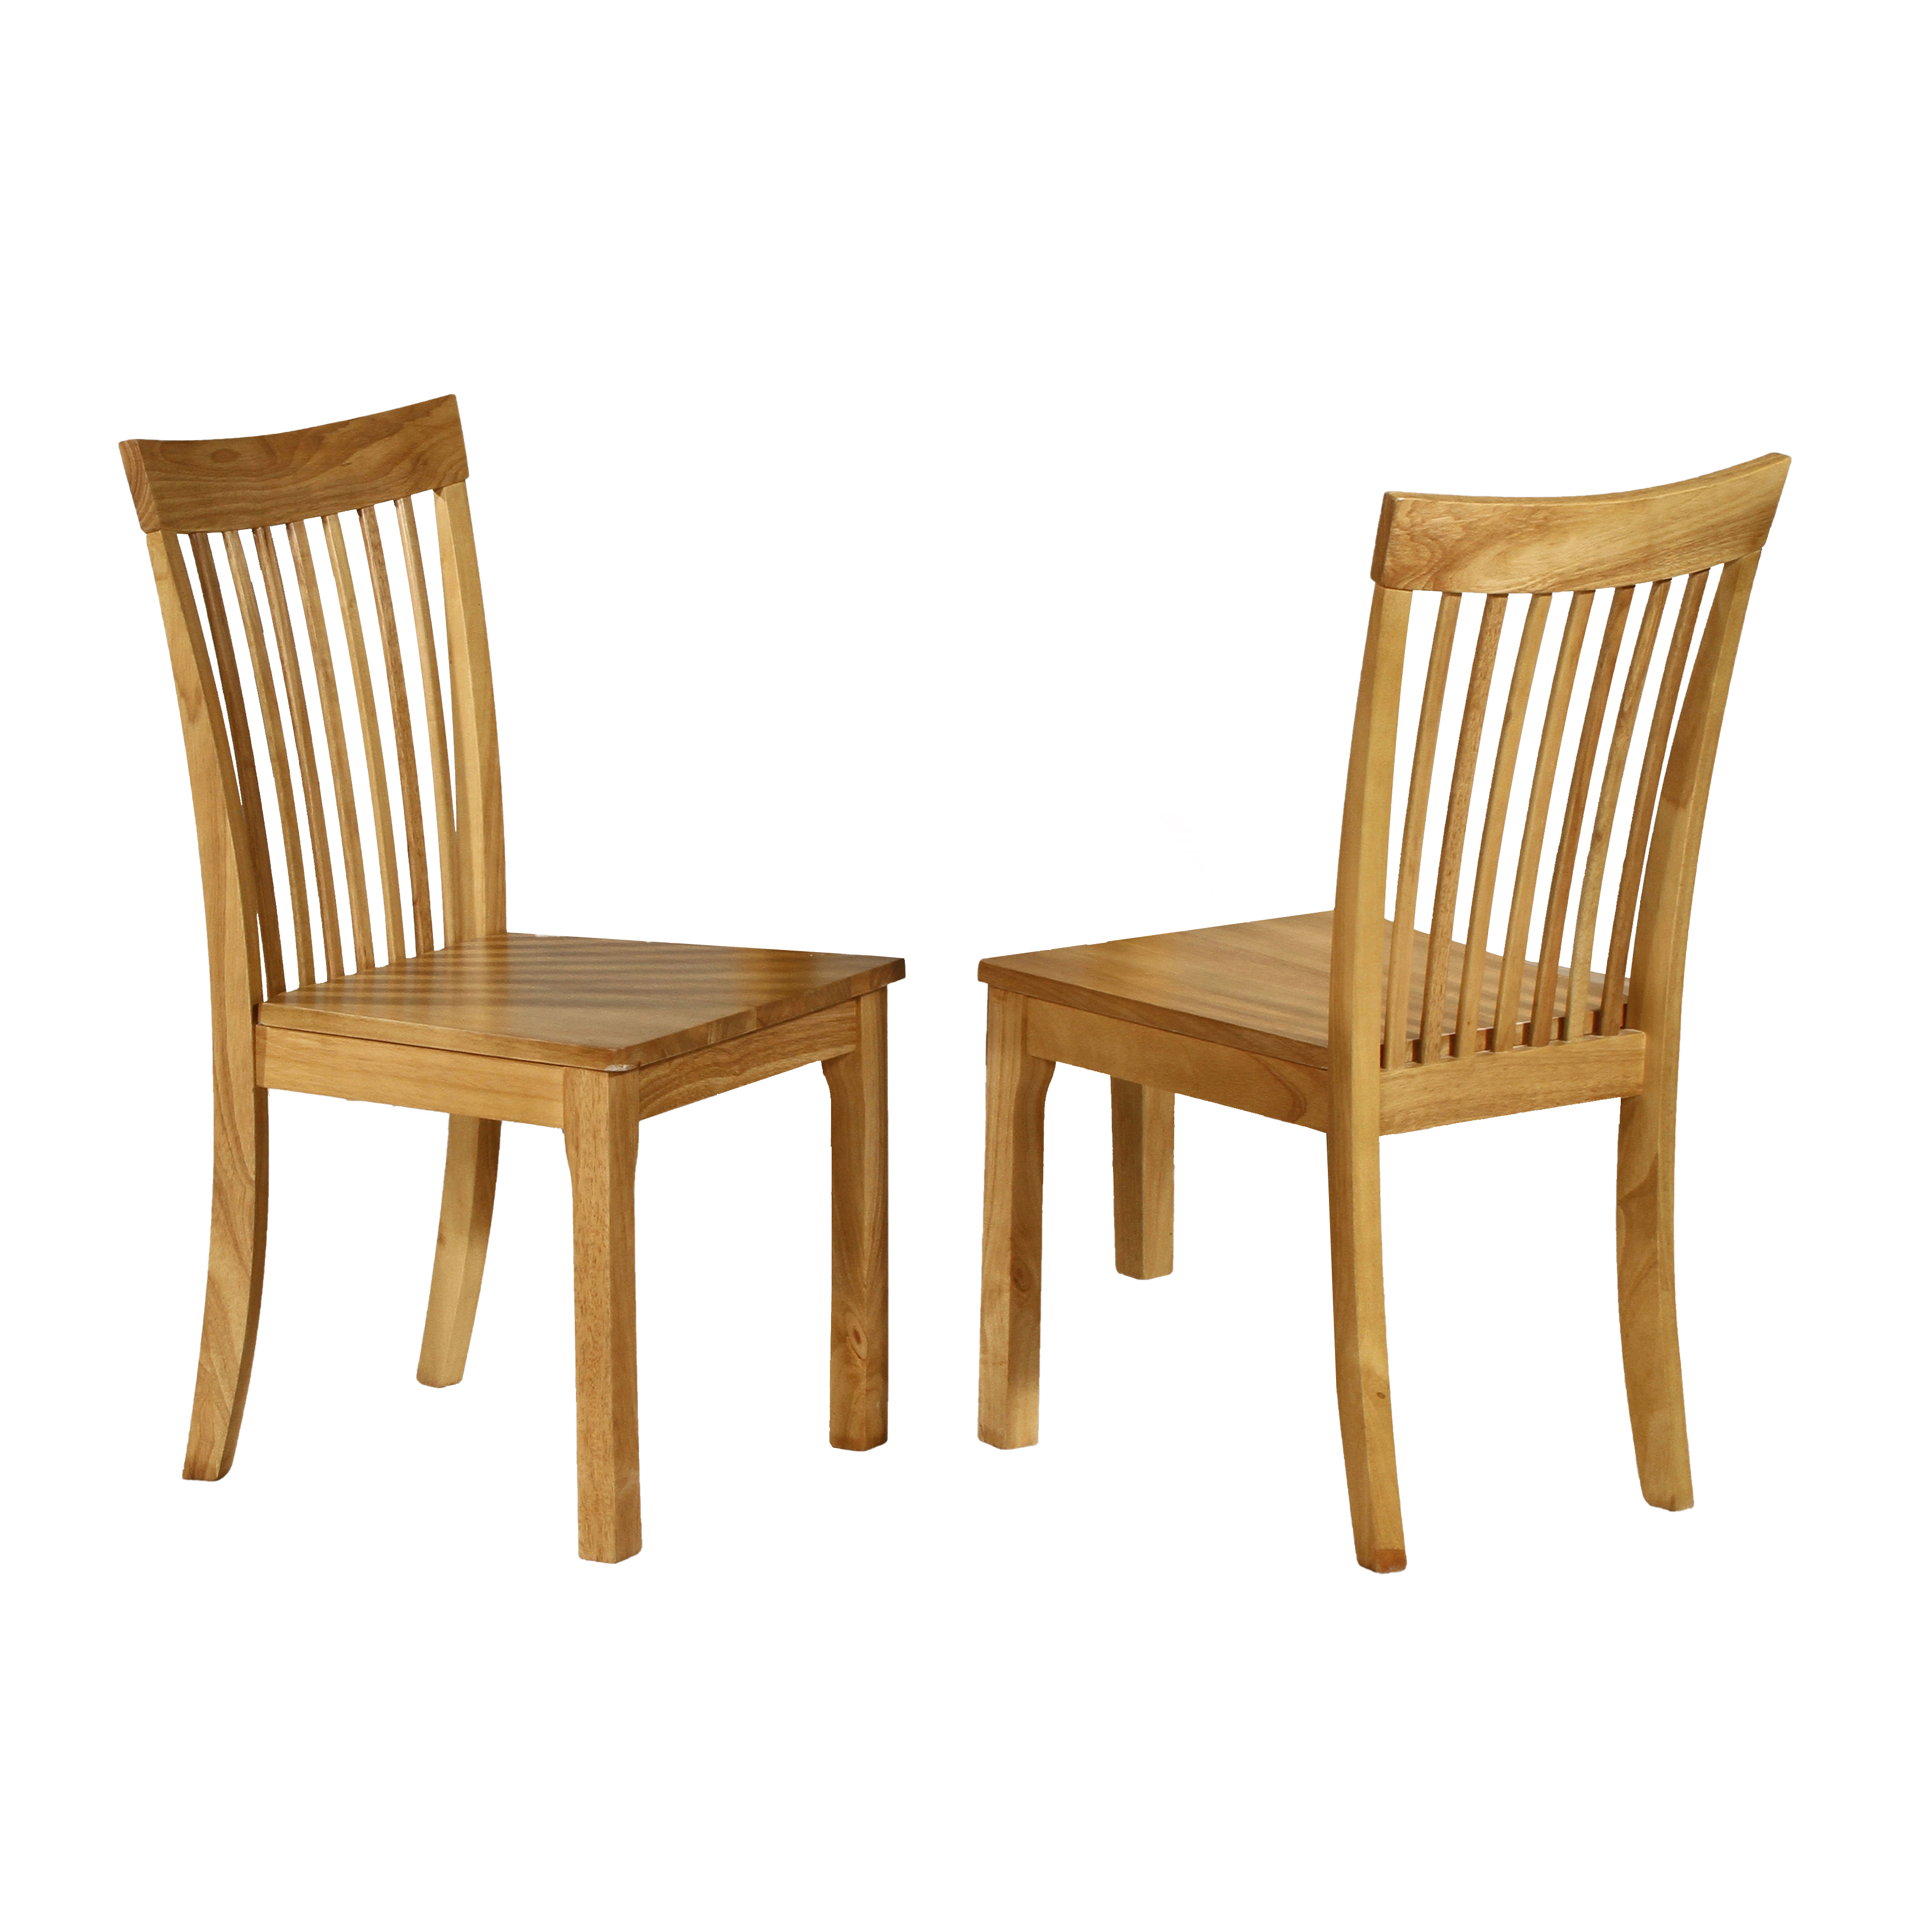 Kurmer Wood Chair - Set of 2 (Natural)